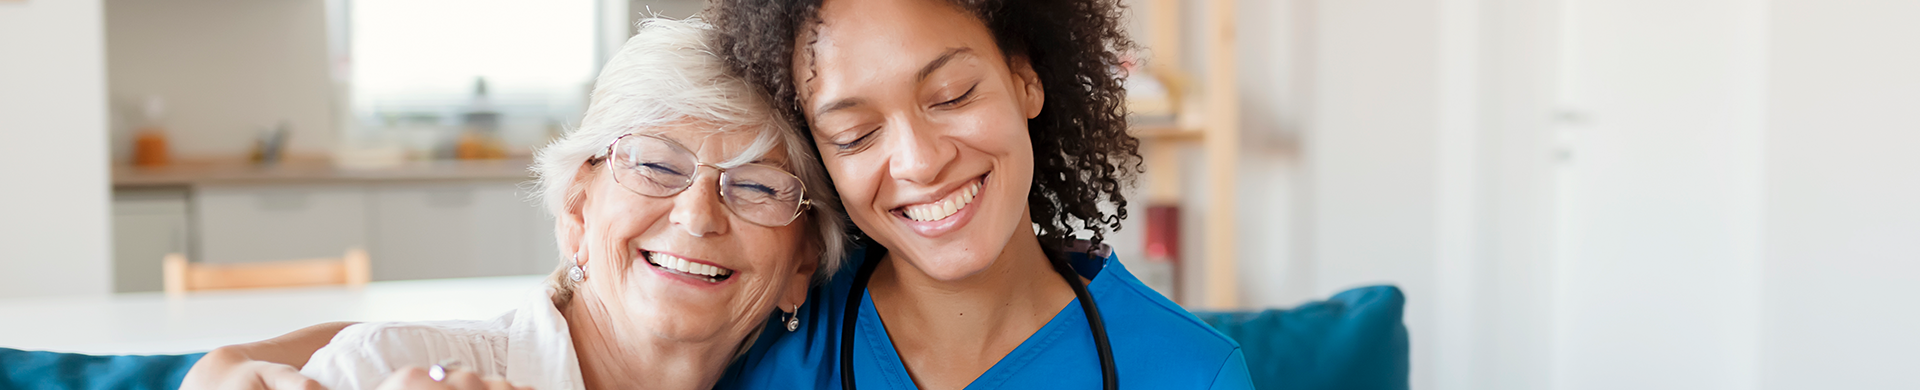 nurse aid embracing senior resident smiling